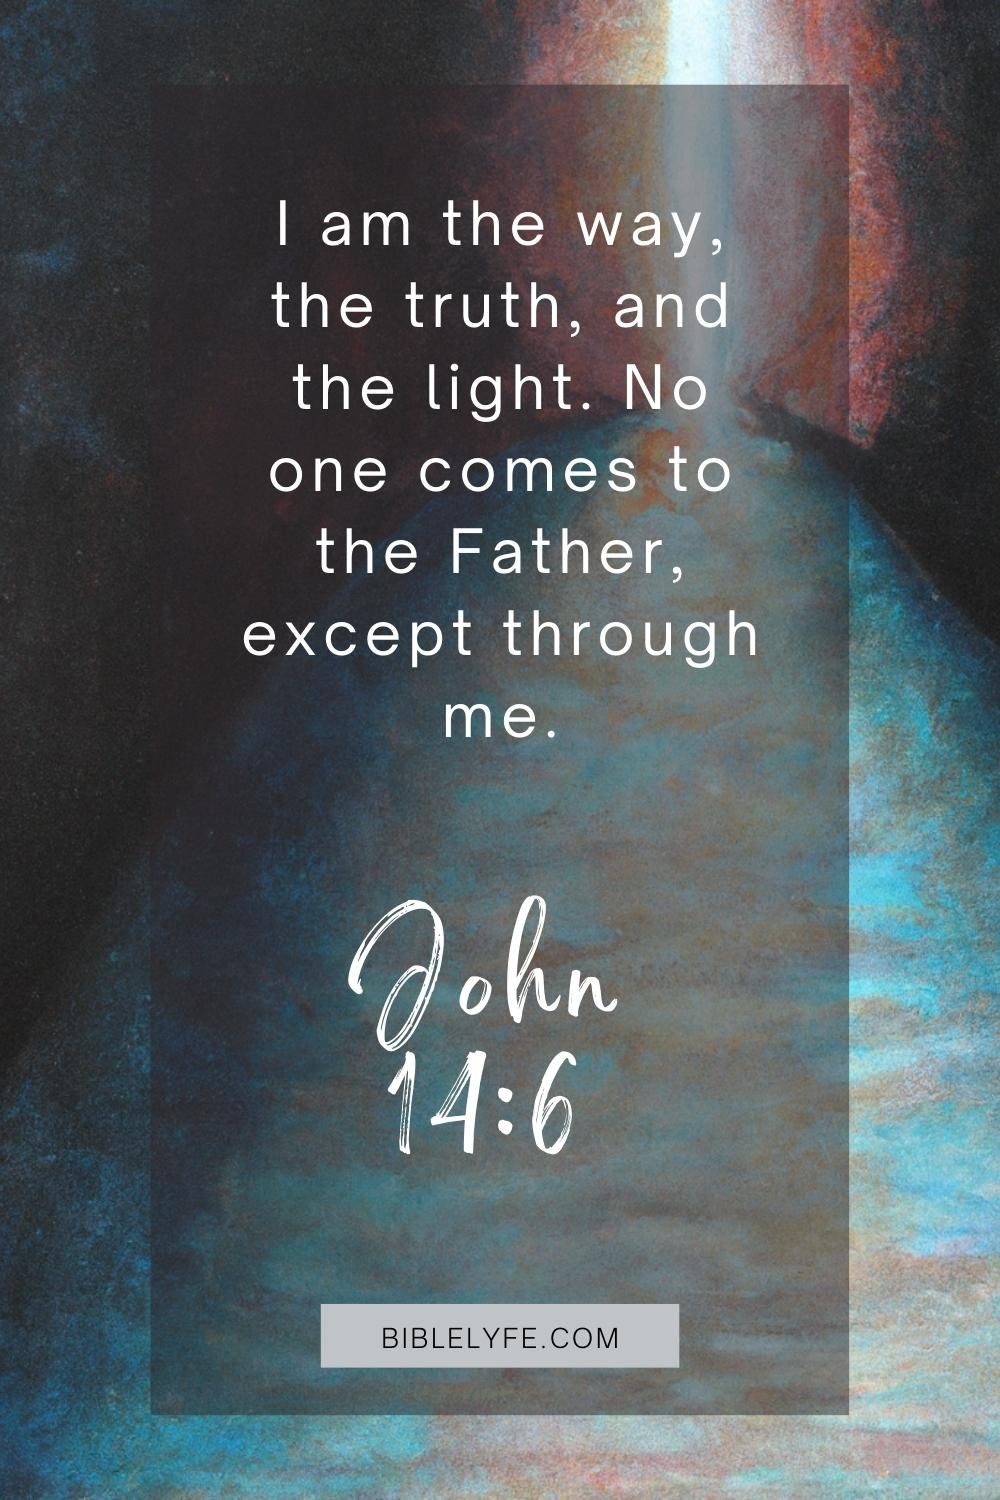 Poster Bíblia Cristã Verse Jesus Way Truth Life